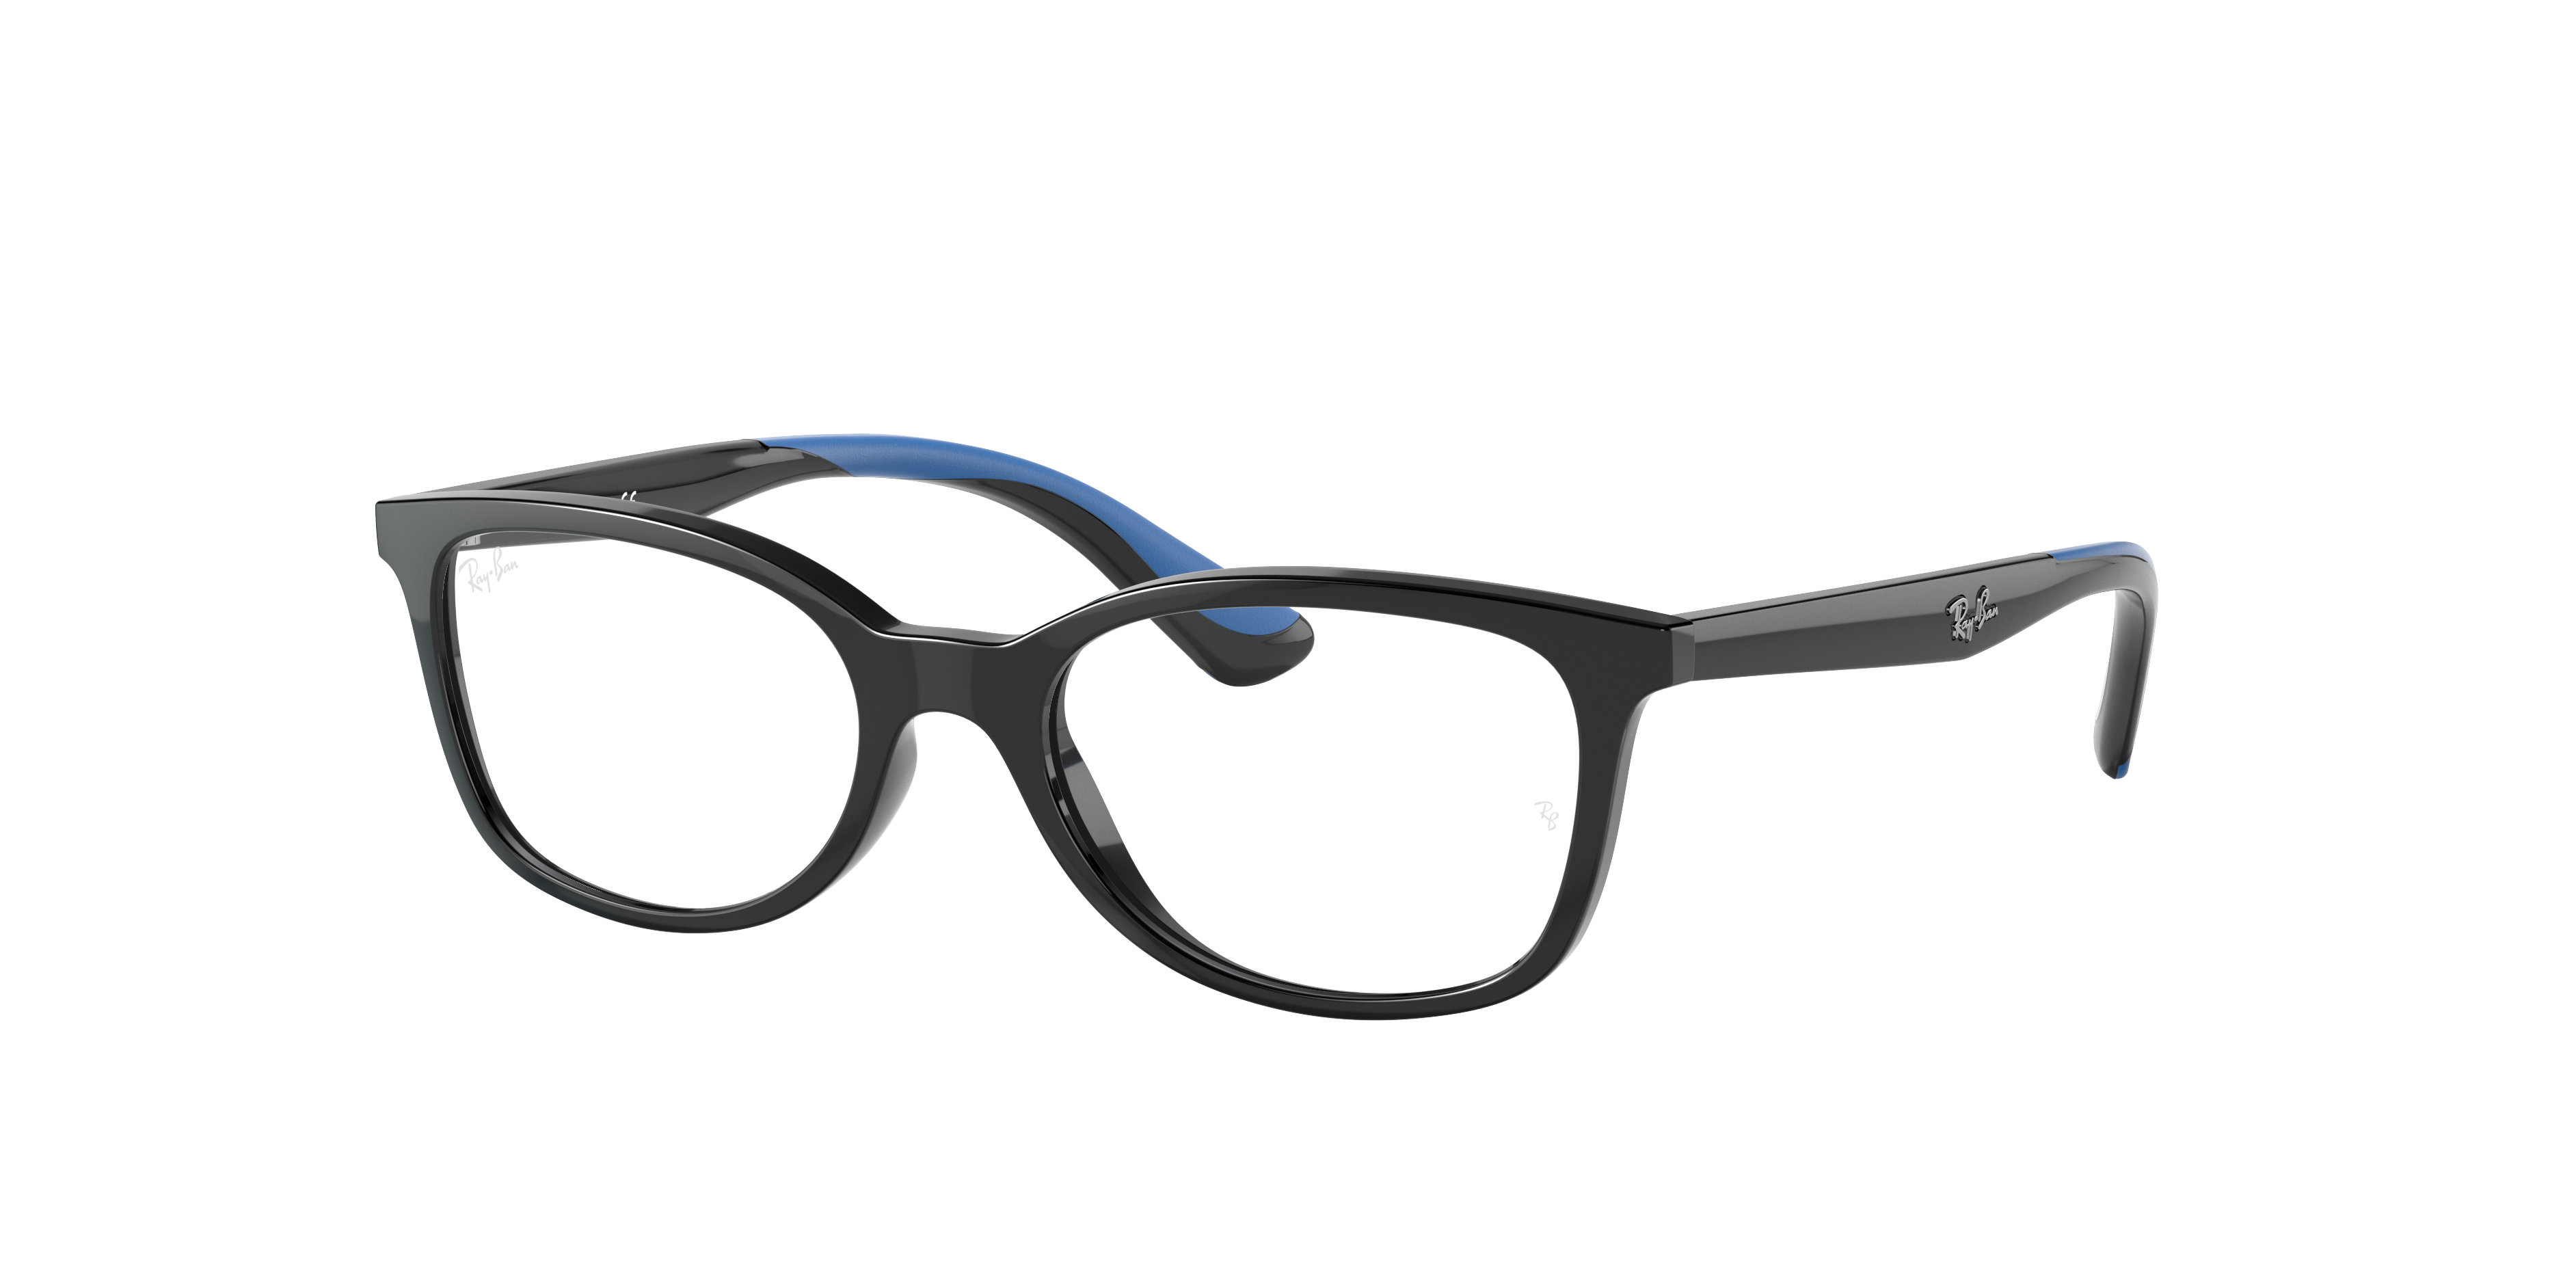 Rb1586 Optics Kids Eyeglasses with Black Frame | Ray-Ban®